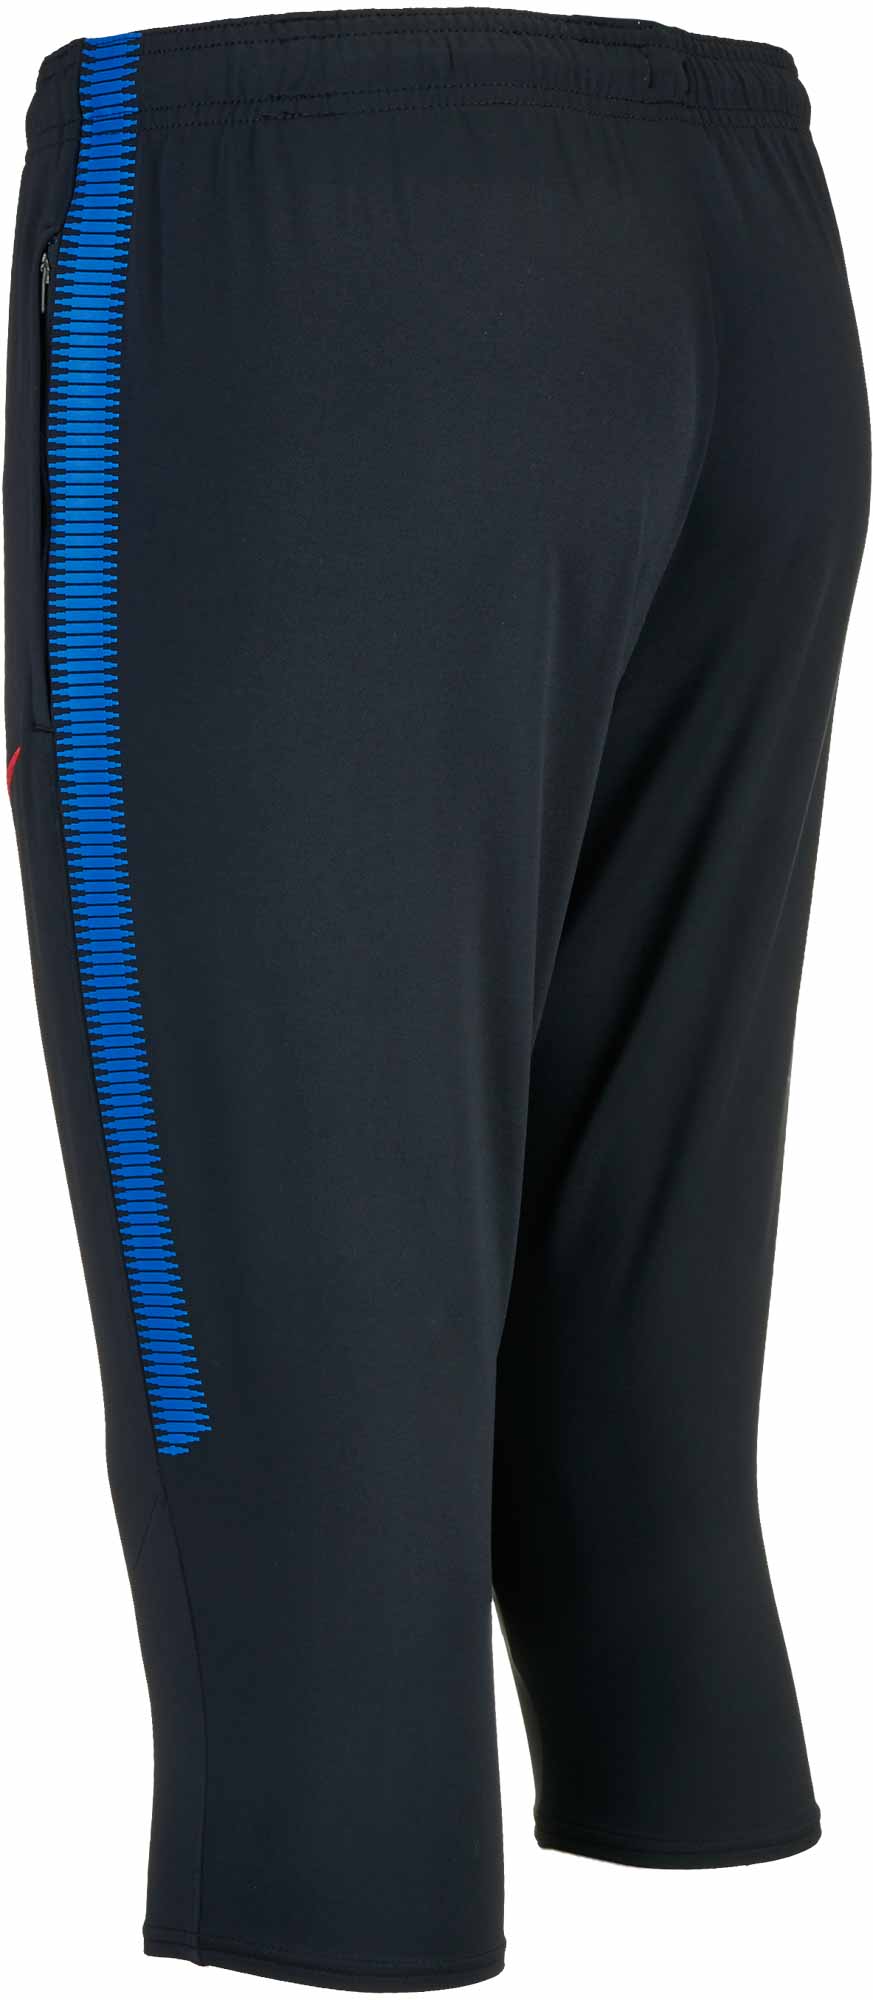 Puma TEAMLIGA TRAINING PANTS - 3/4 sports trousers - peacoat/white/dark  blue - Zalando.co.uk